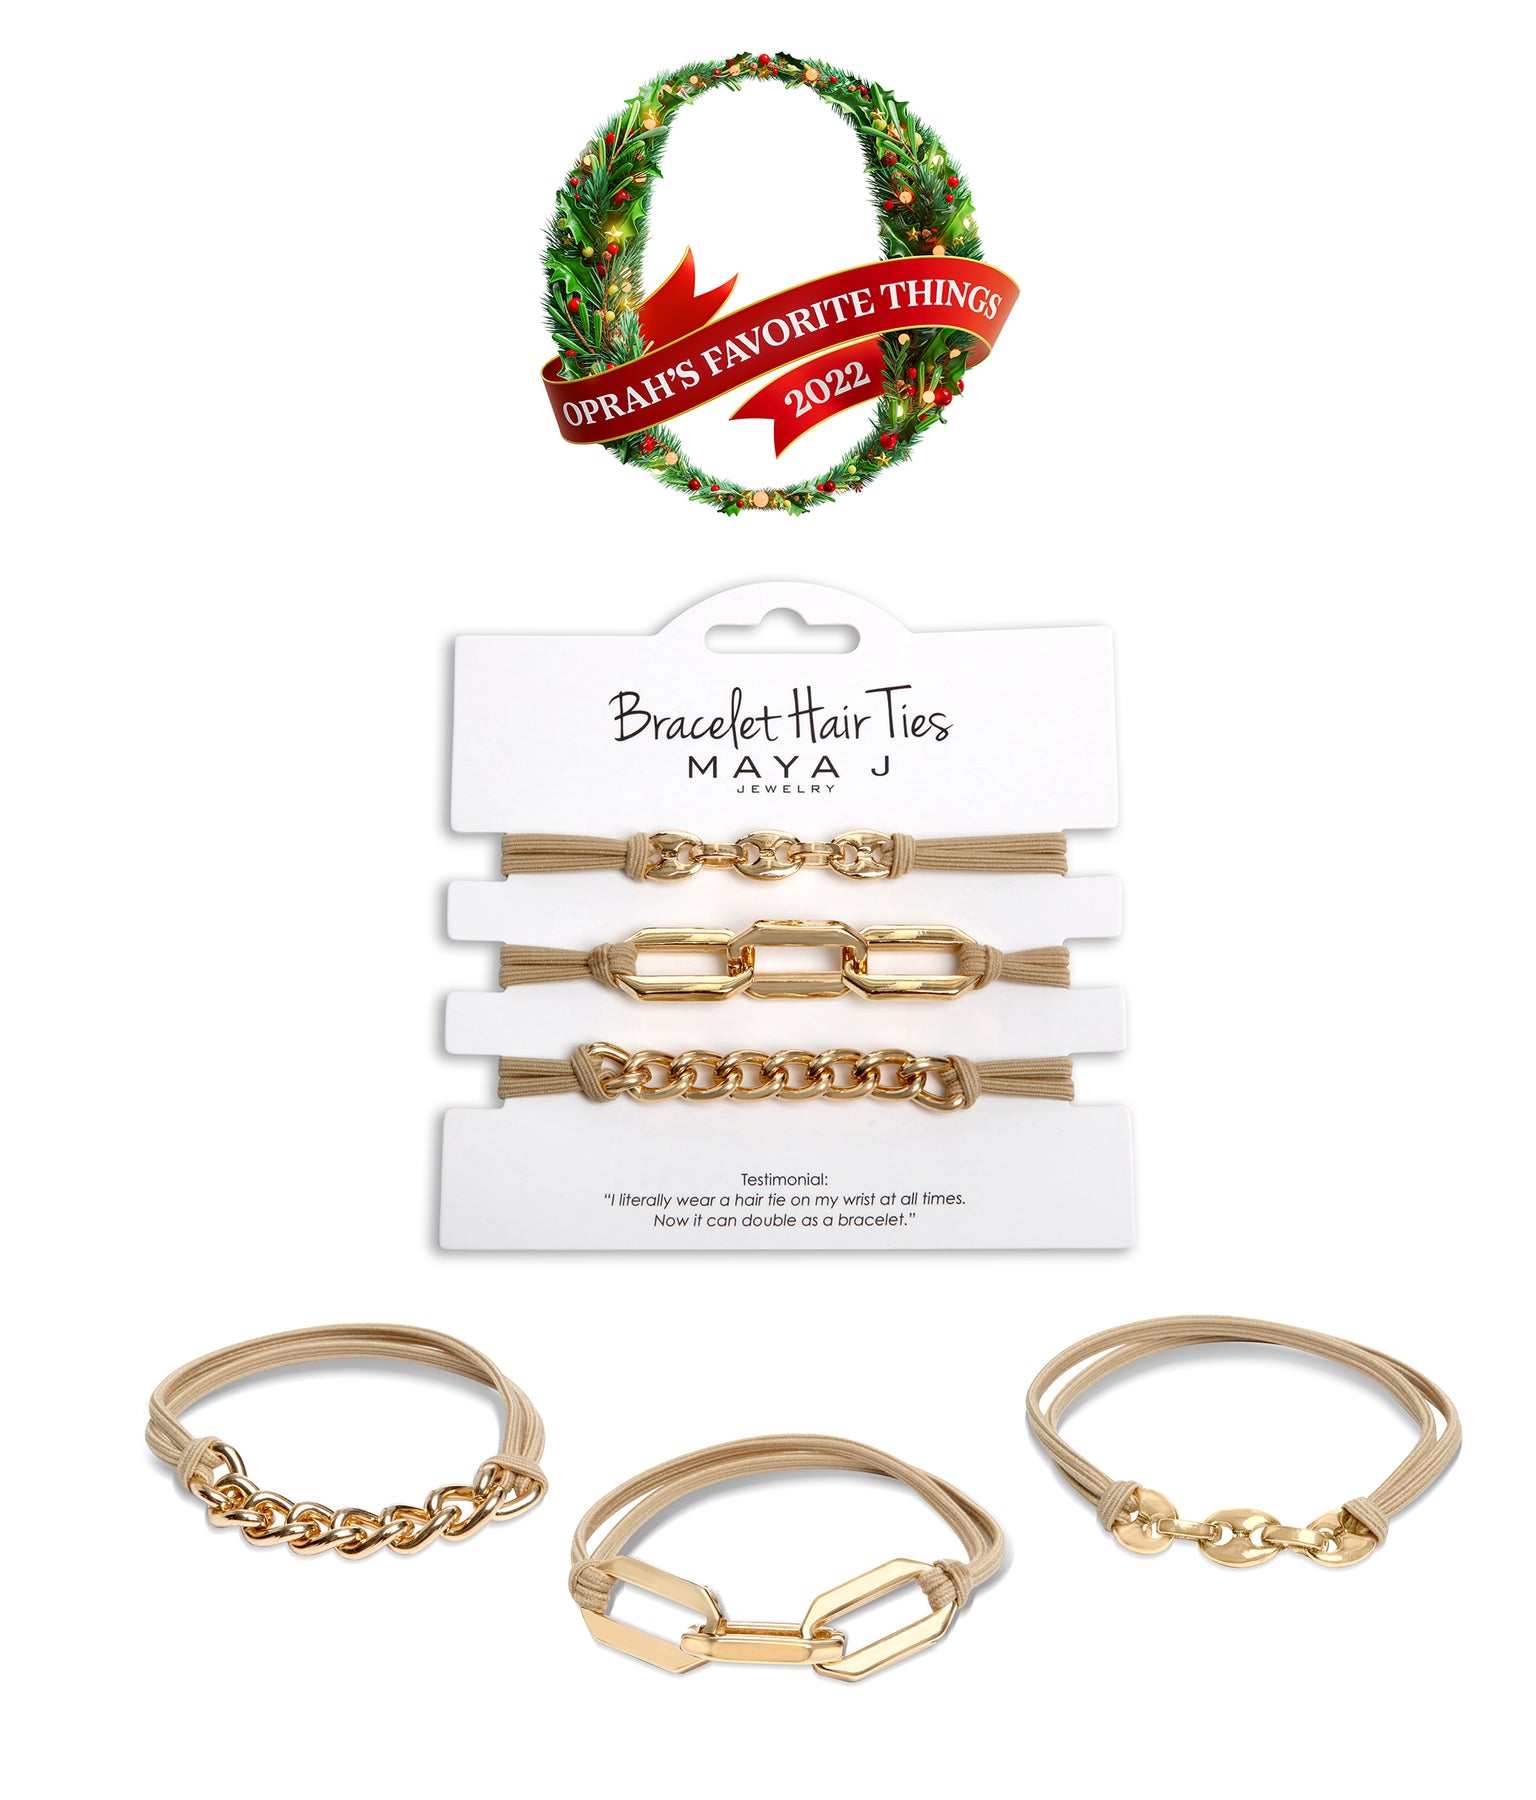 NEW Maria Shireen Rose Gold Hair Tie Artisan Bracelet, Perfect gift | eBay